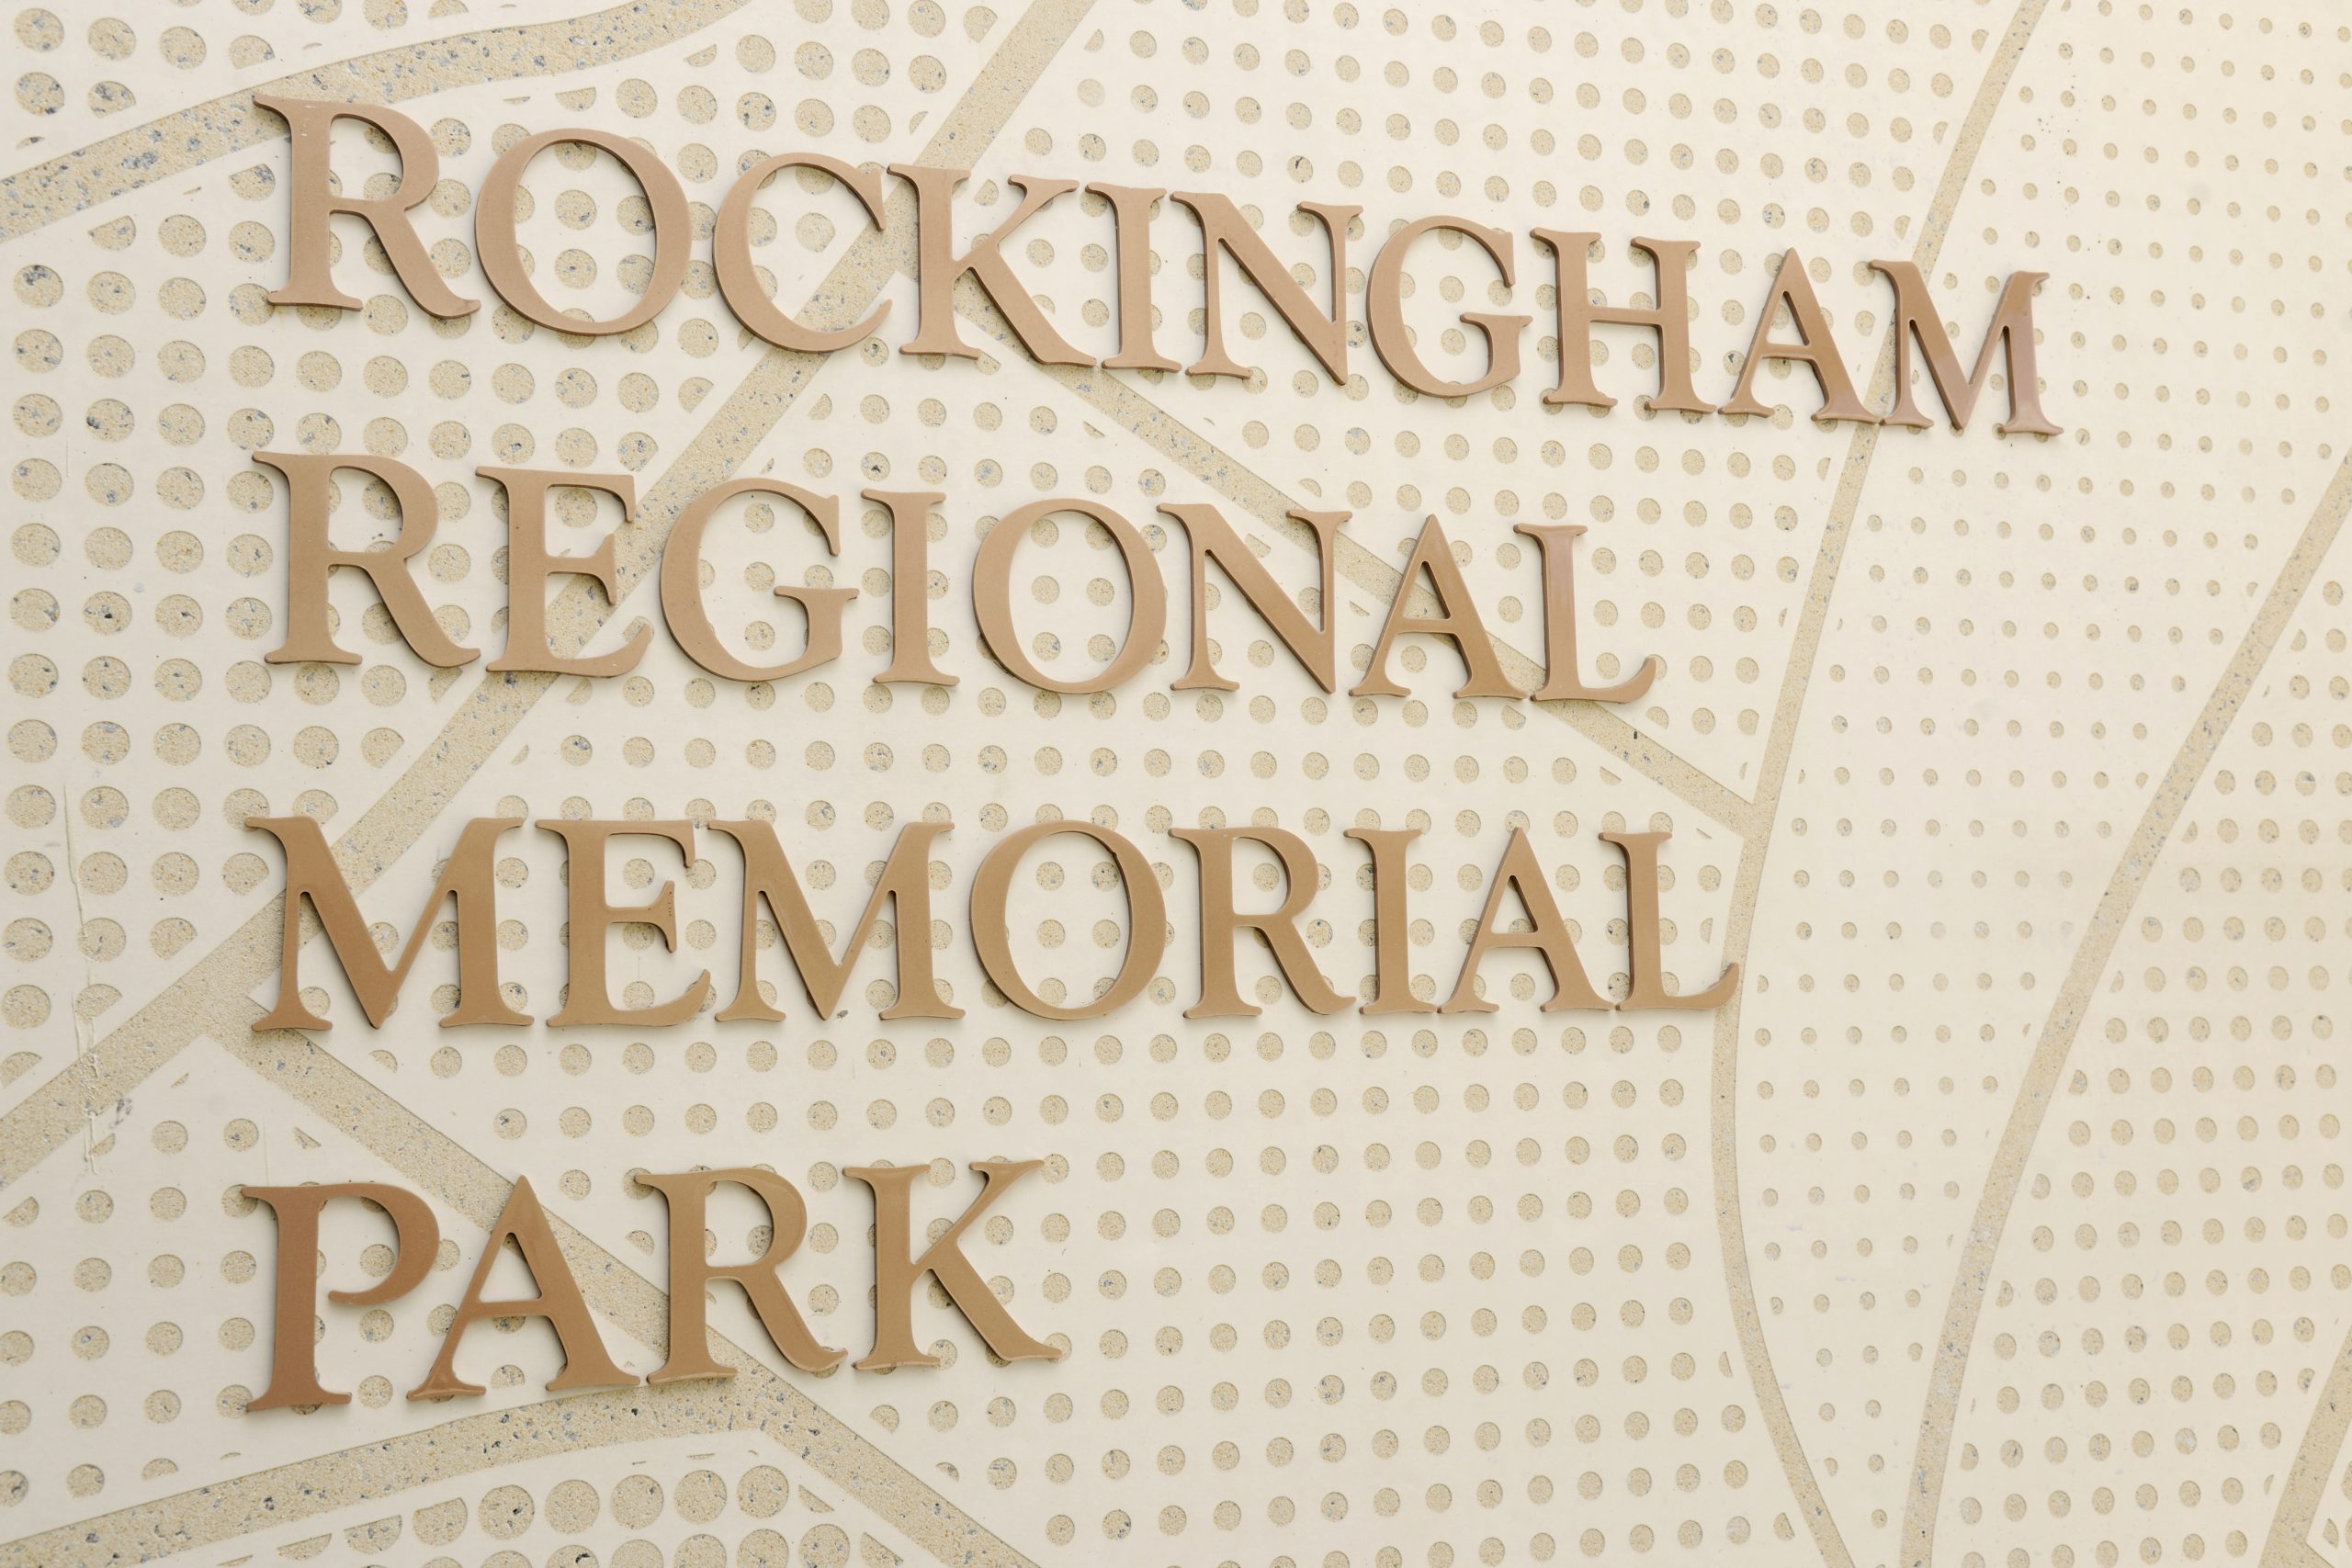 Rockingham Regional Memorial Park signage at administration